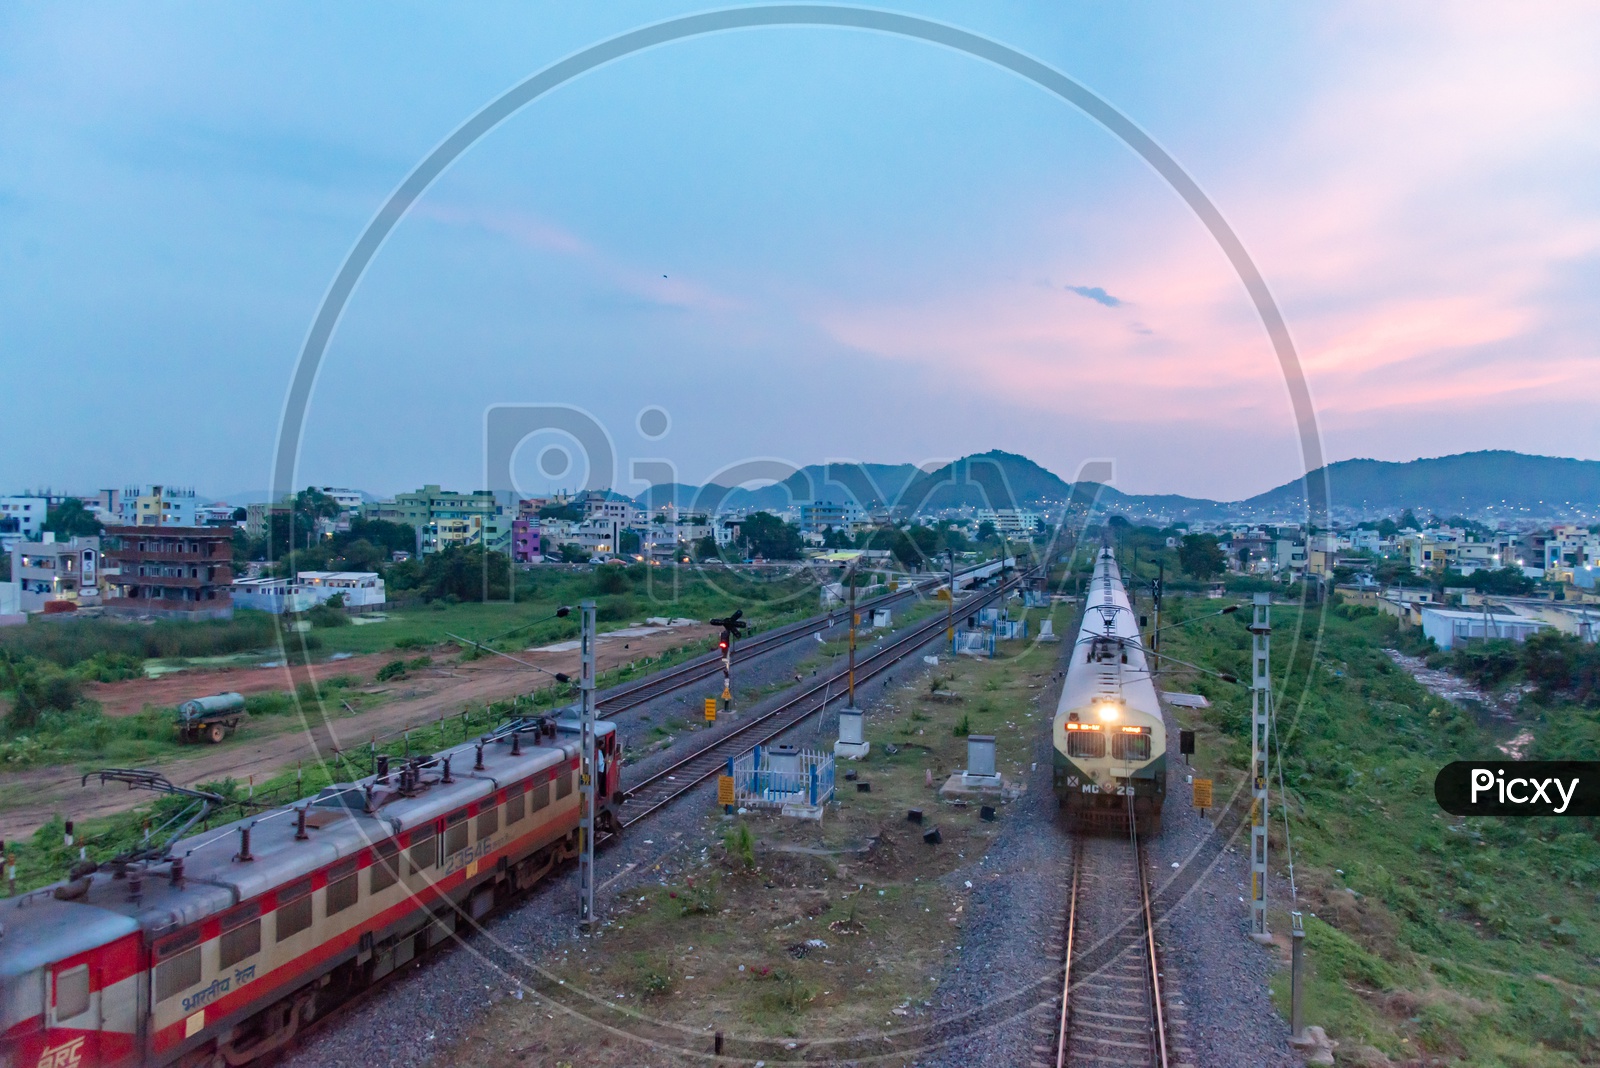 Indian Railways, South Central Railway, Vijayawada